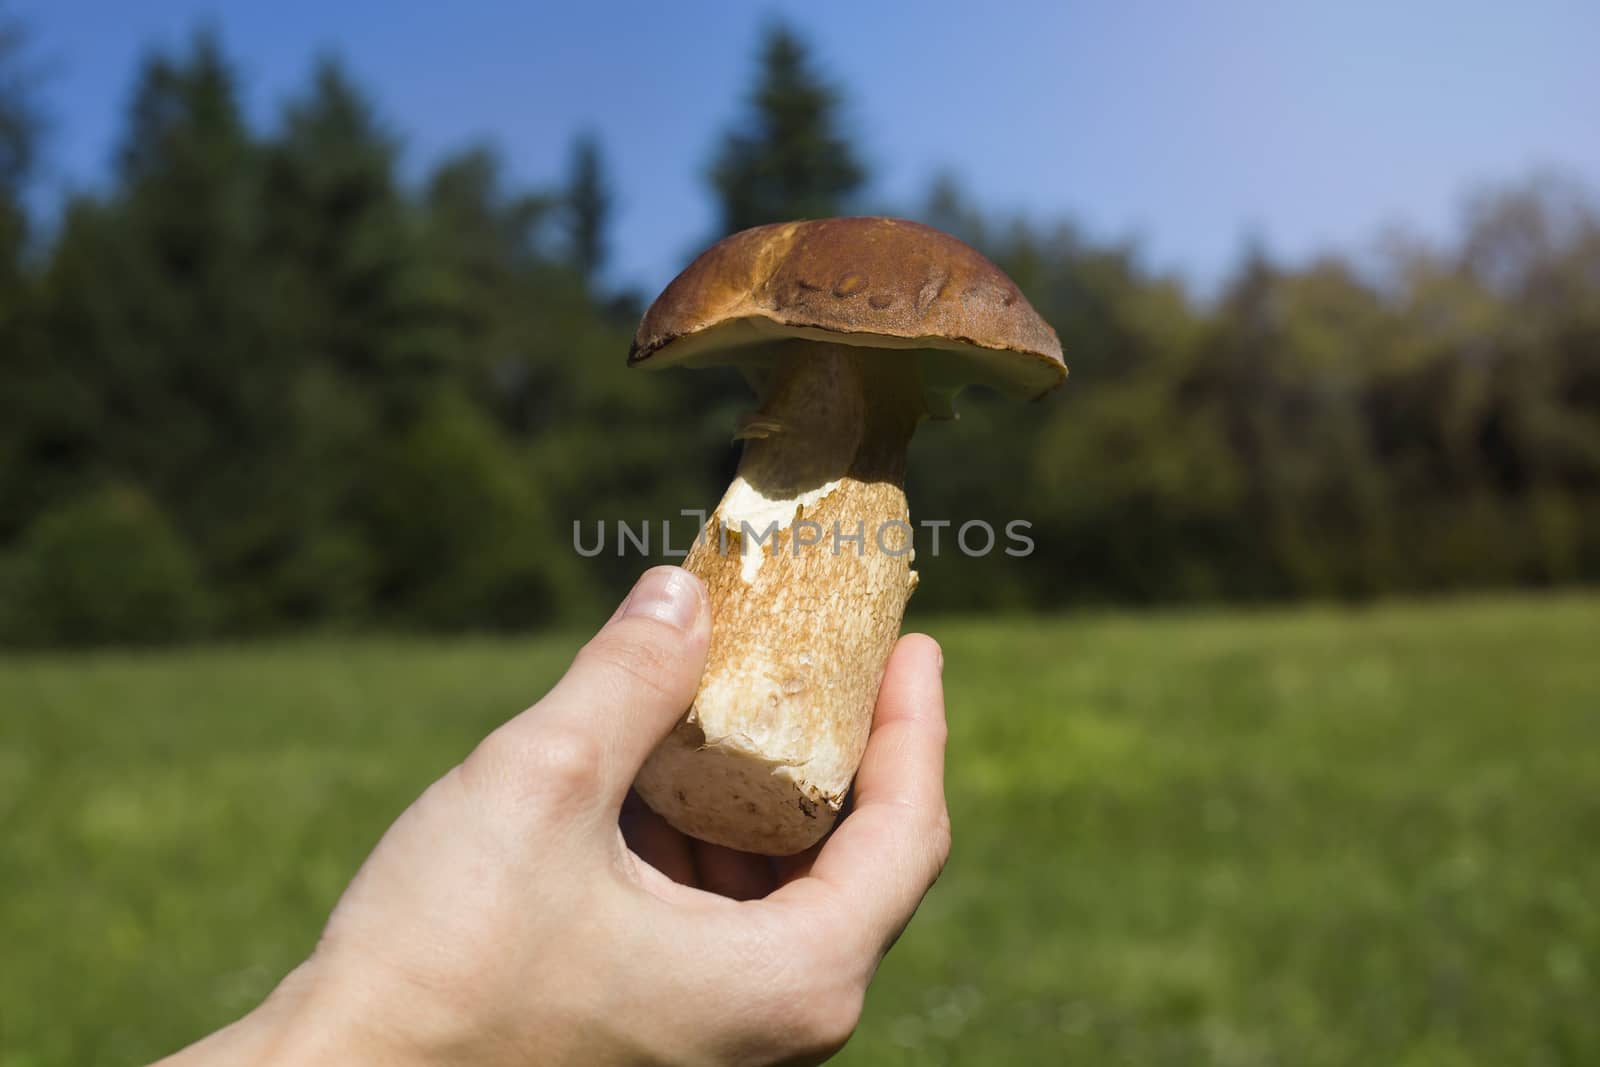 Hand holding a mushroom by photosampler